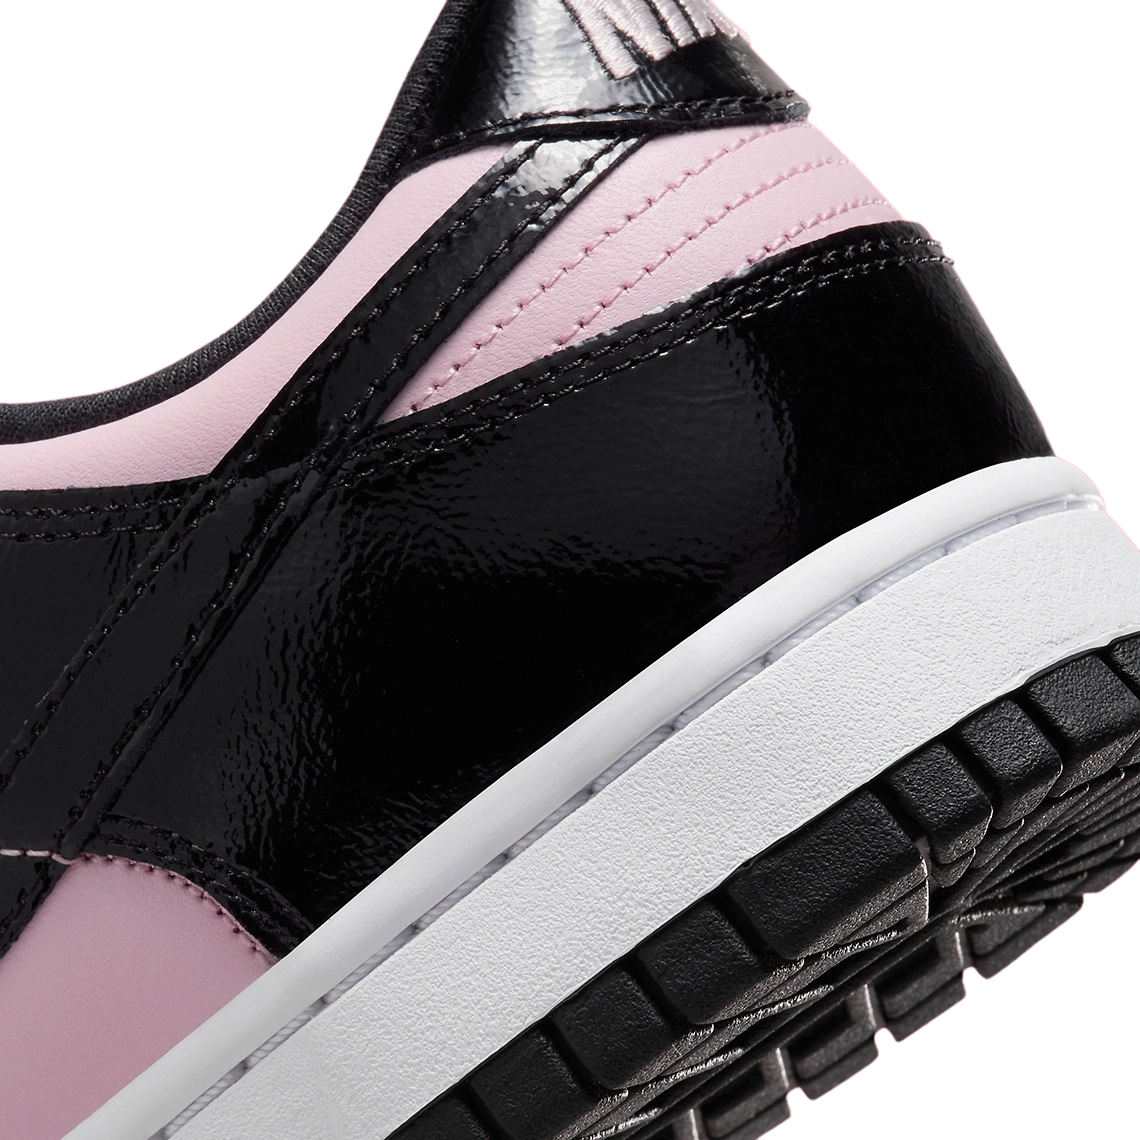 Nike Dunk Low - Black Patent Pink (W)